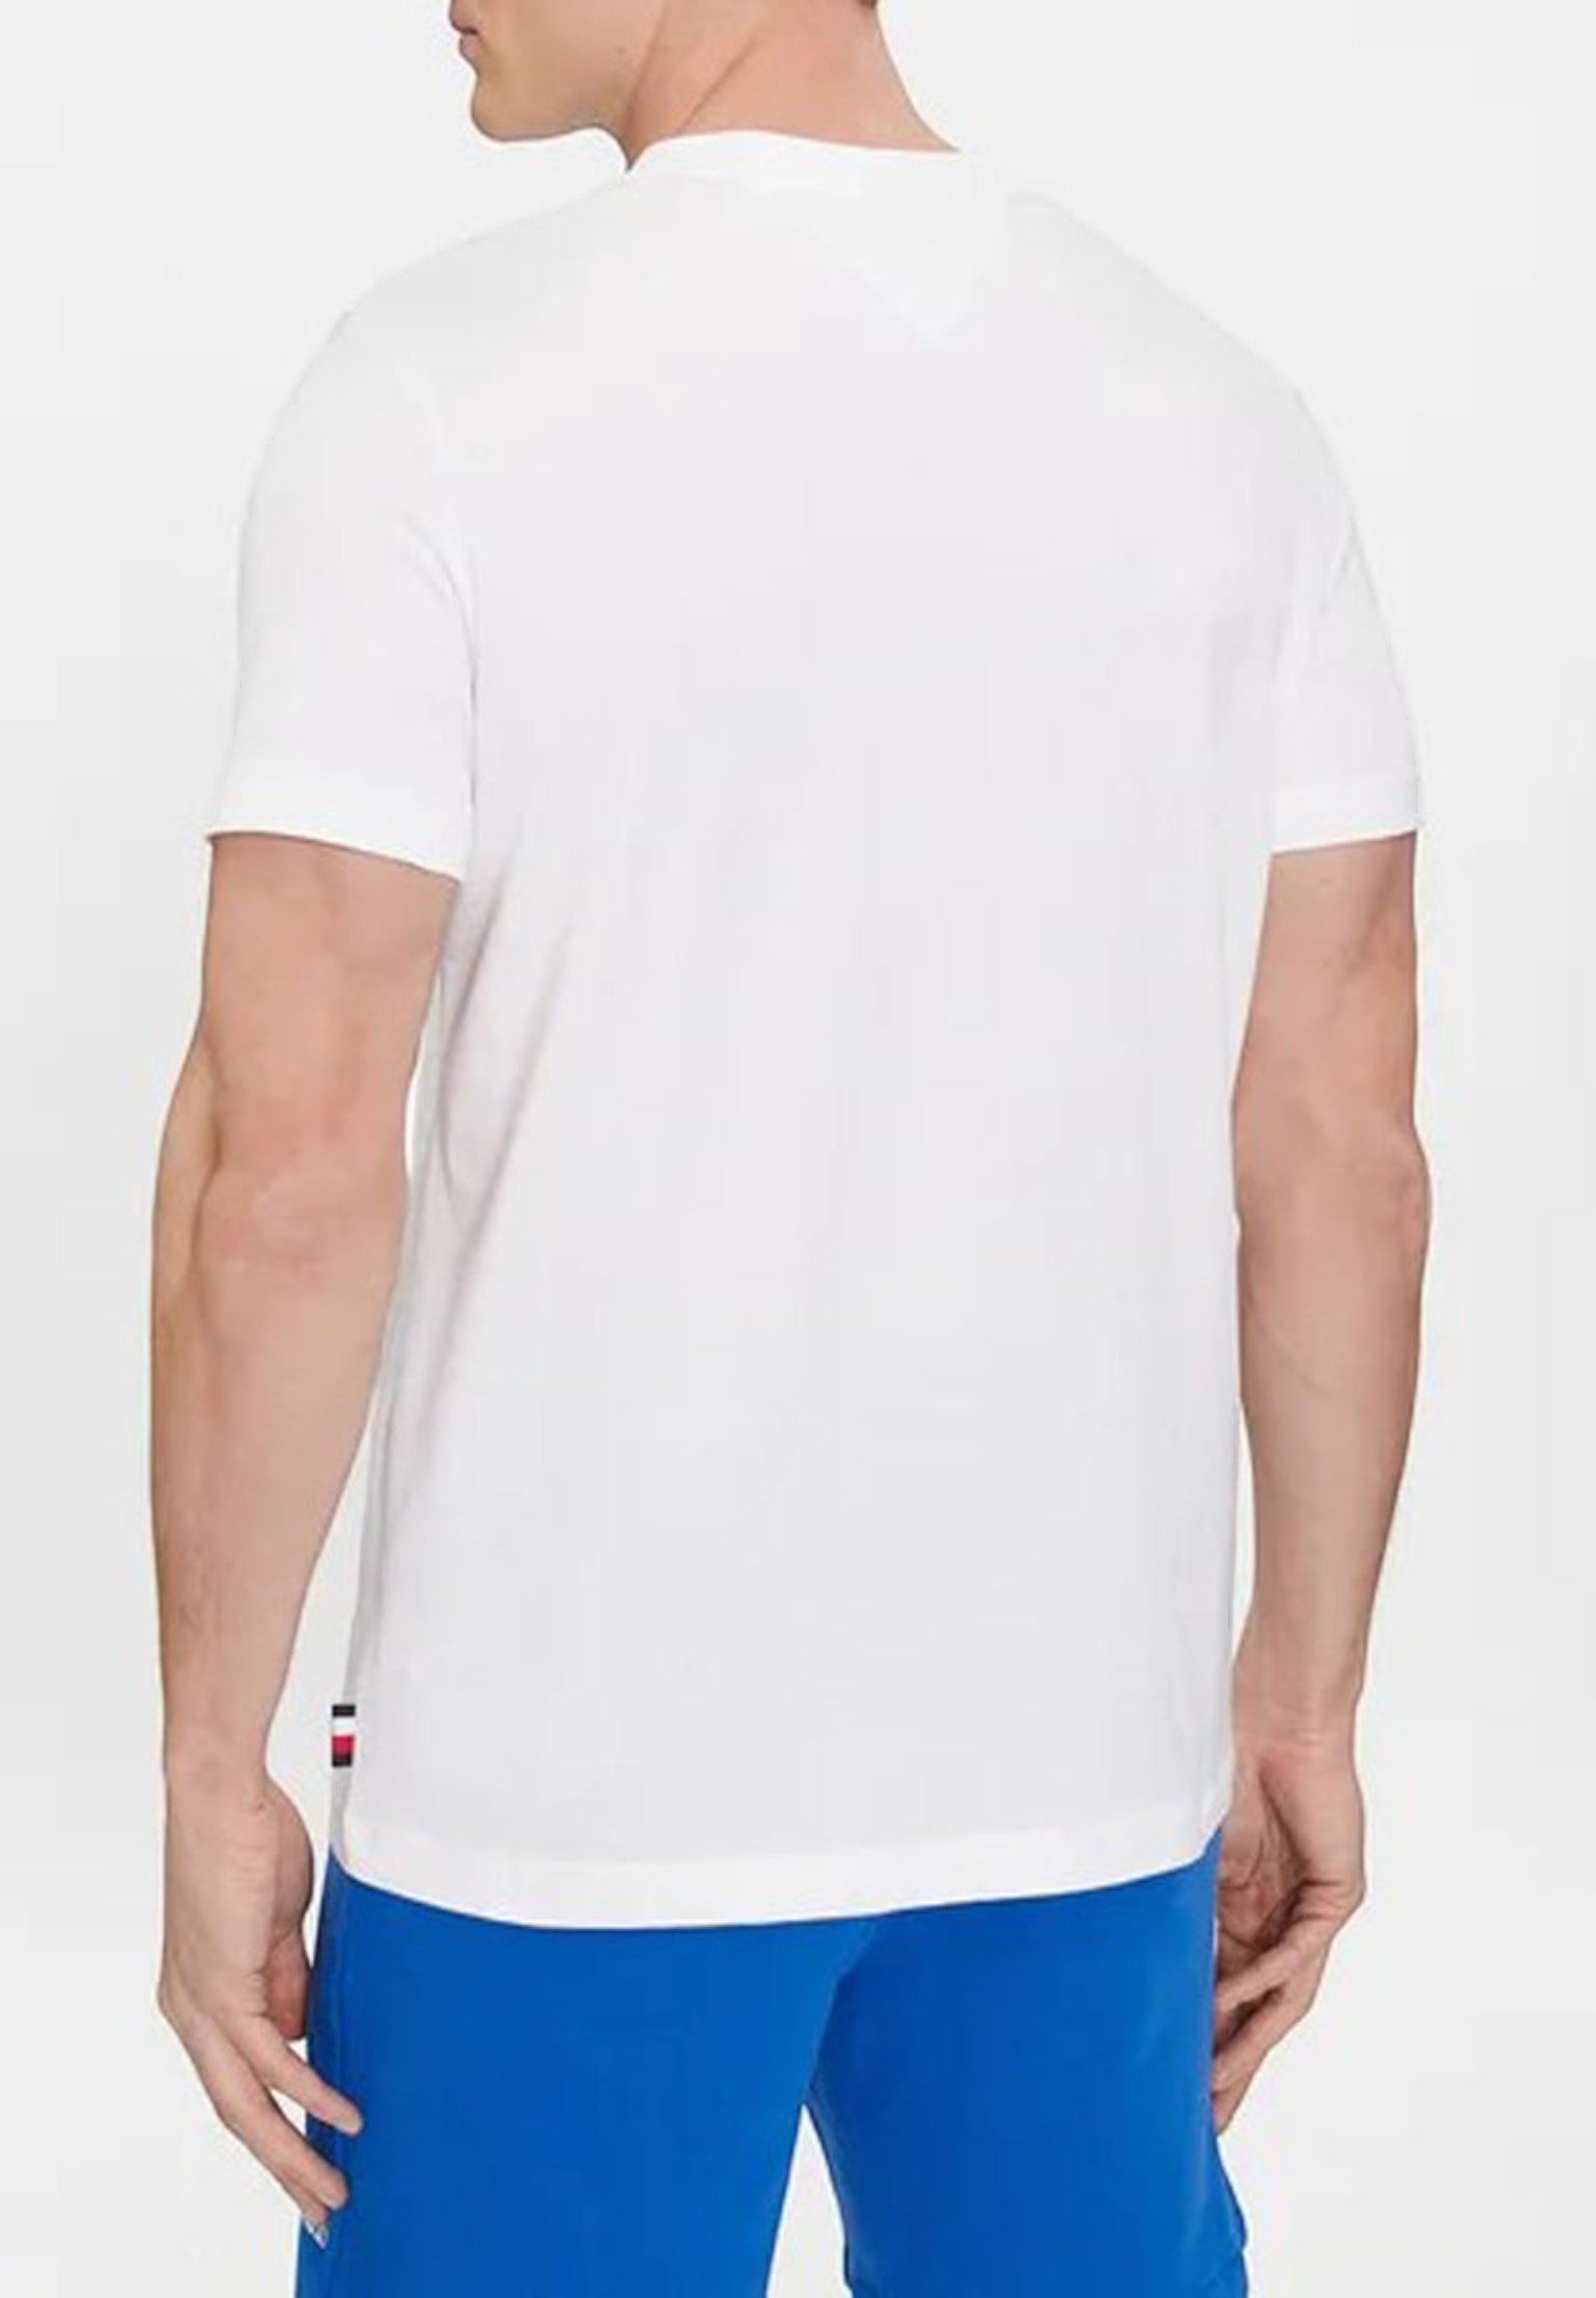 Tommy Hilfiger T-Shirt* Mw0mw34387 White